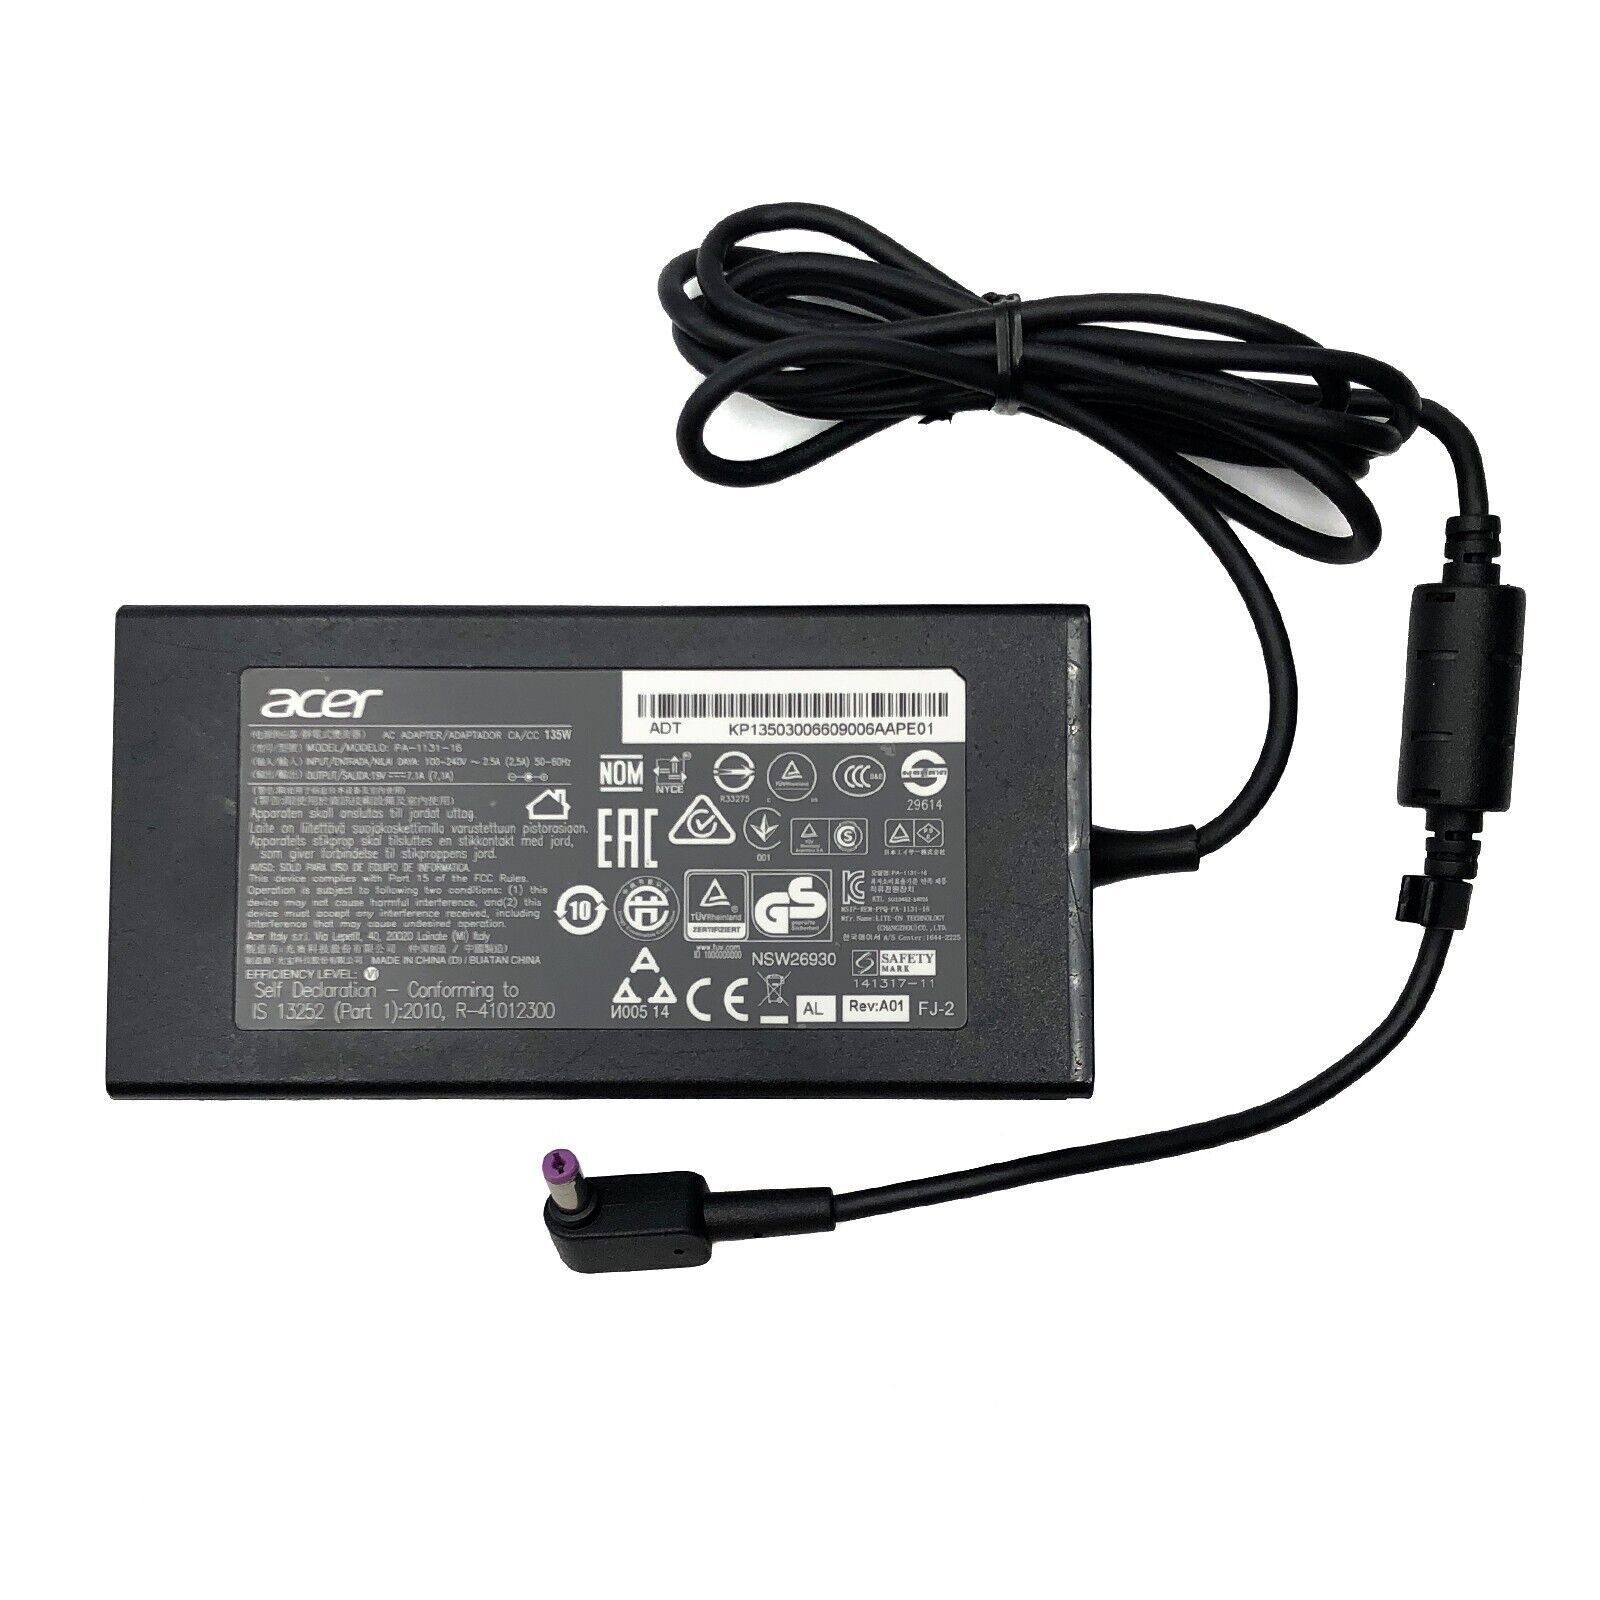 Original Acer Nitro 5 Gaming Series Laptop AC Adapter Power Supply & Cord 135W